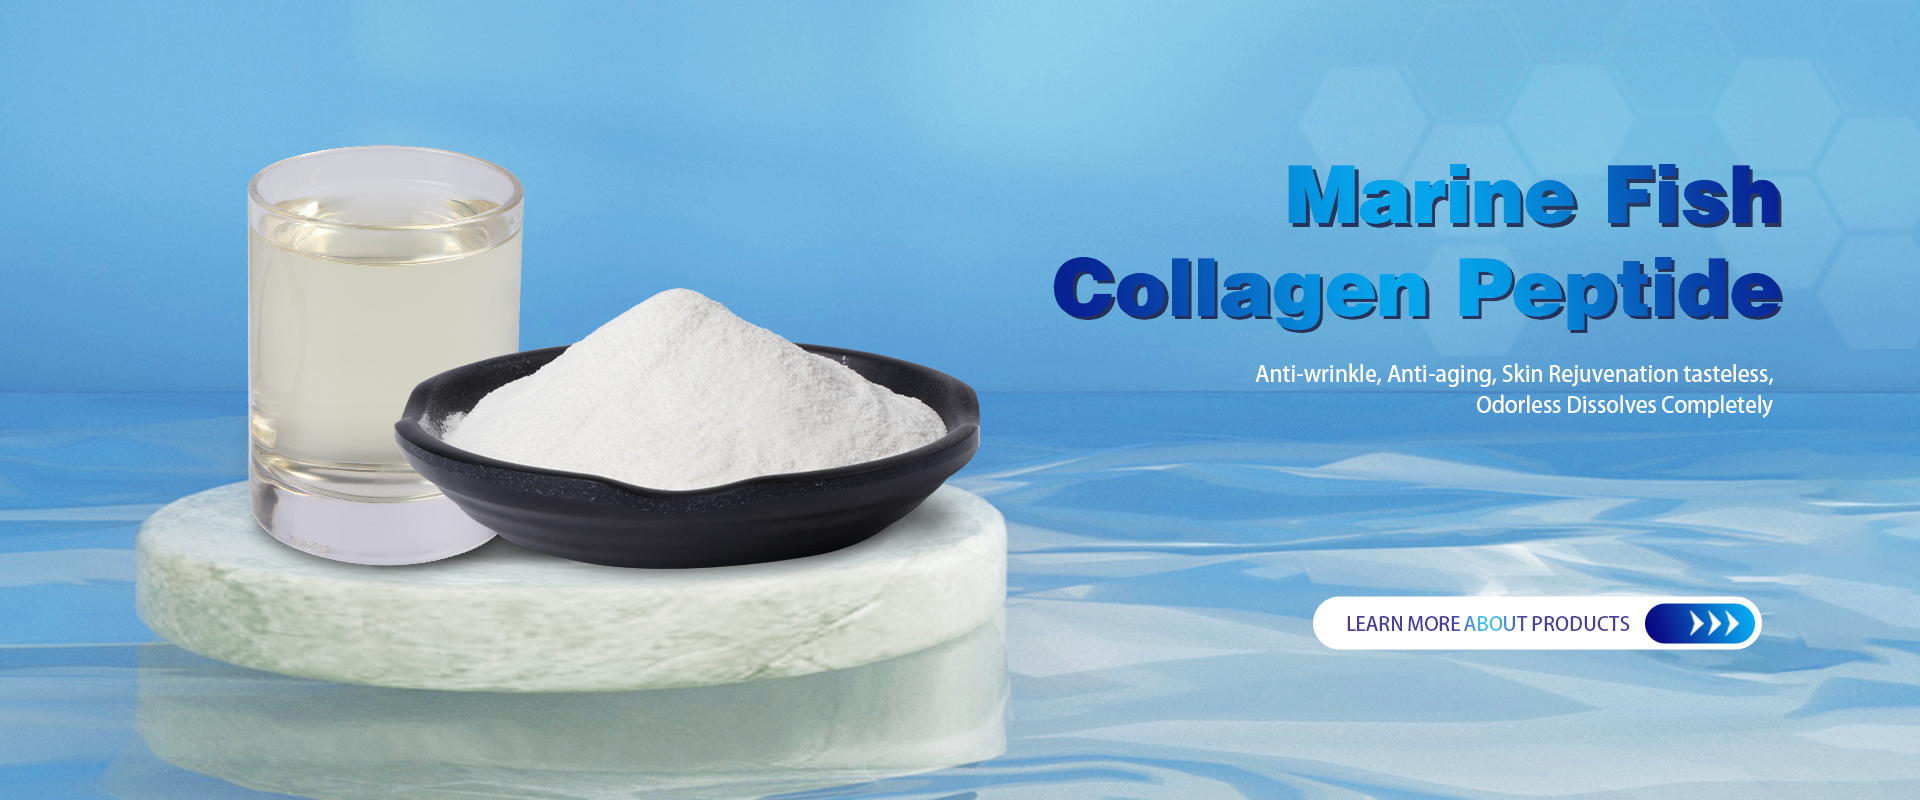 Hot Sale marine fish collagen peptide